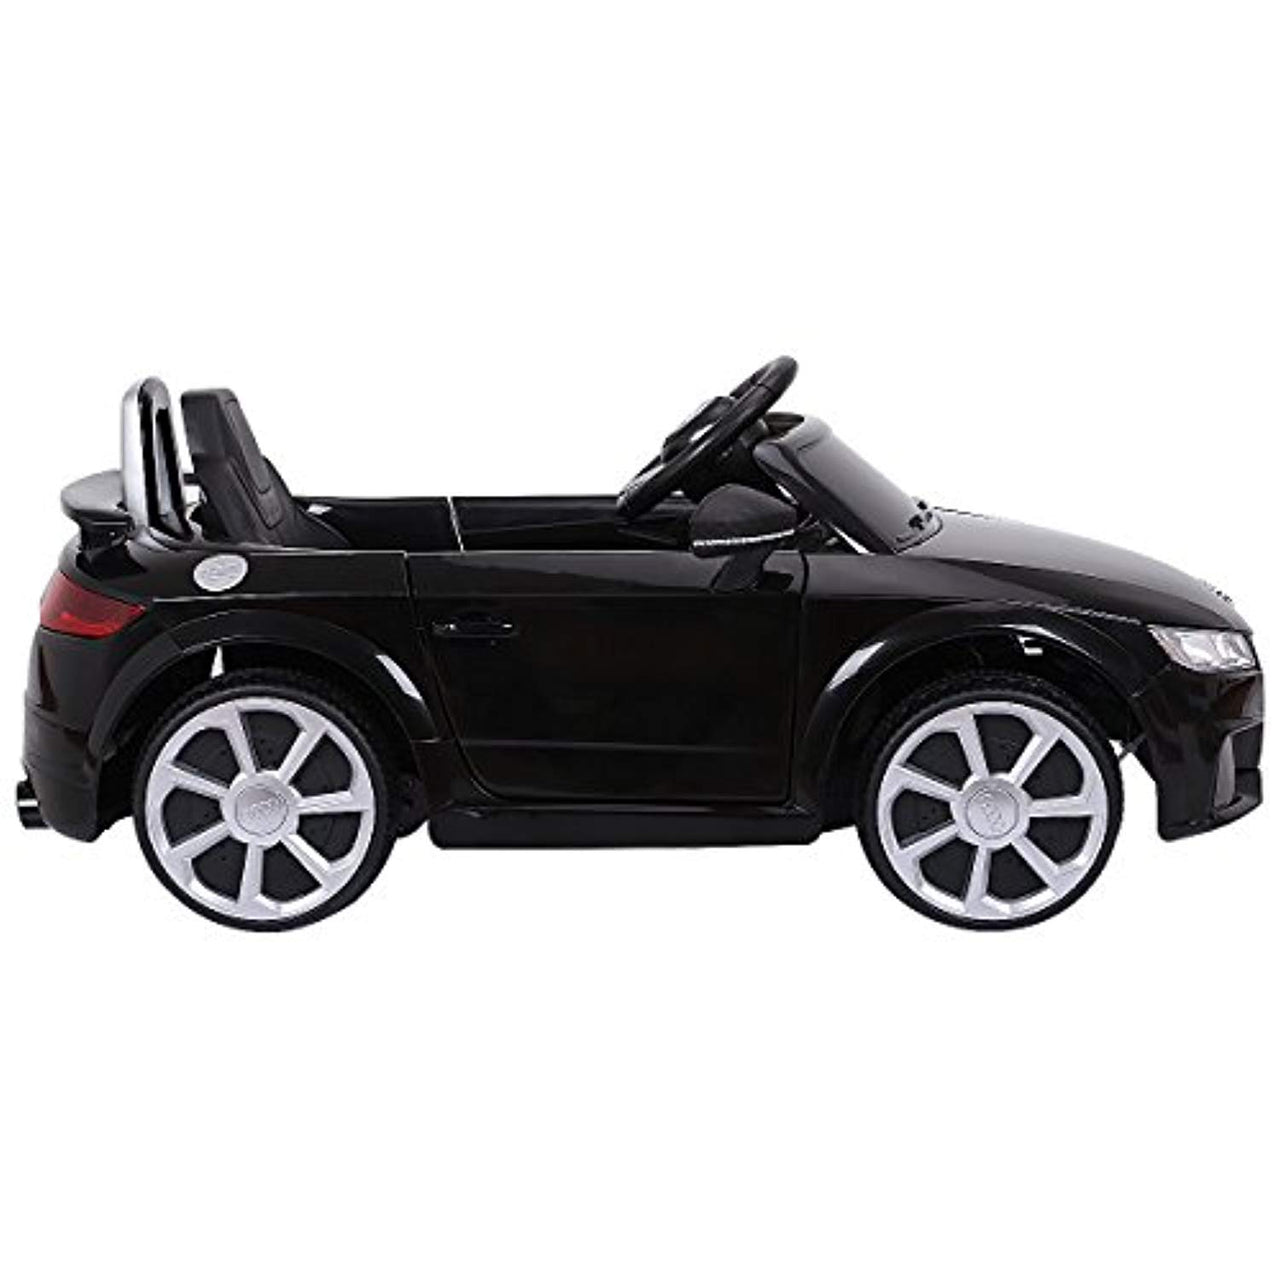 New 2019 Kids Ride On Car, Licensed 12V Audi TT RS, Remote Control Manual Two Modes Operation, MP3 Lights (Black) - LK Auto Factors